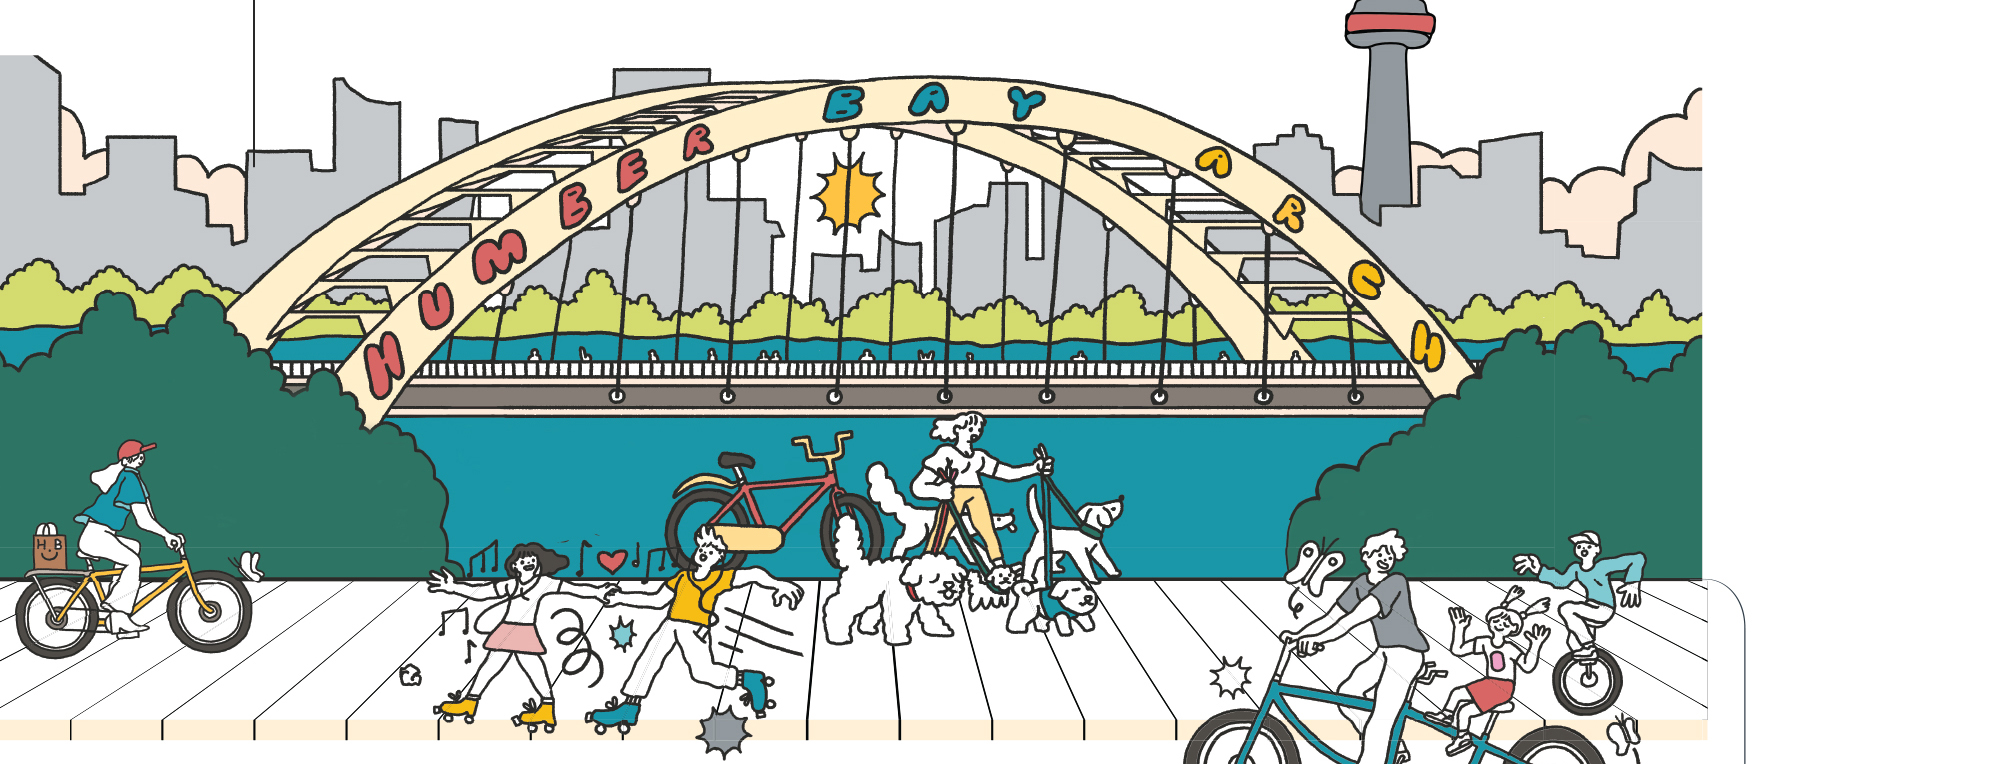 Cartoonized artwork of Humber Bay Arch, CN Tower and people walking/biking